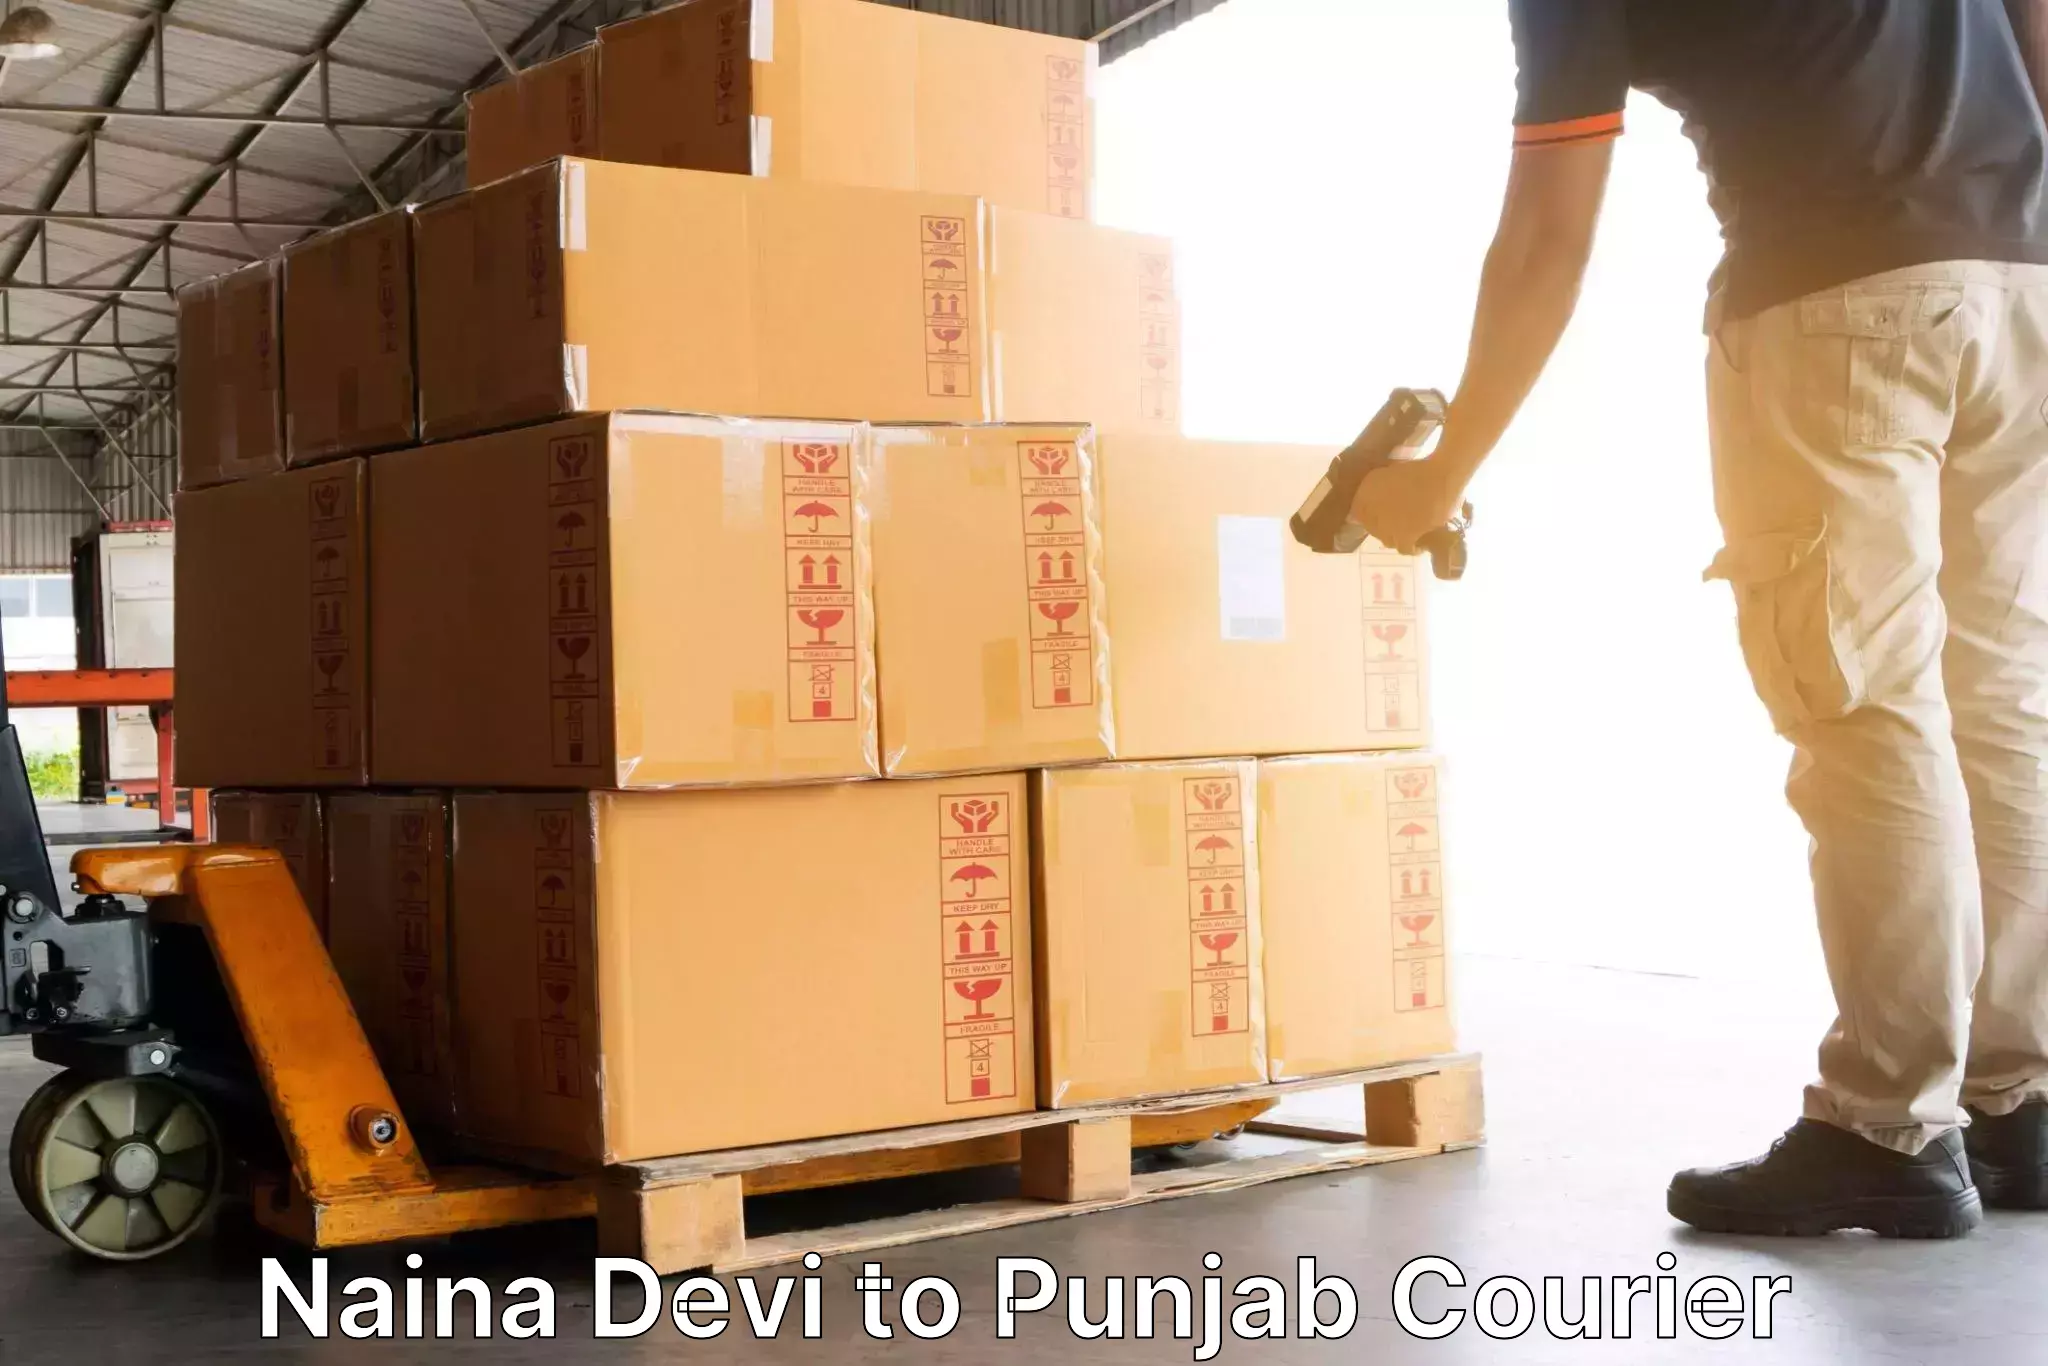 24-hour courier service Naina Devi to Abohar